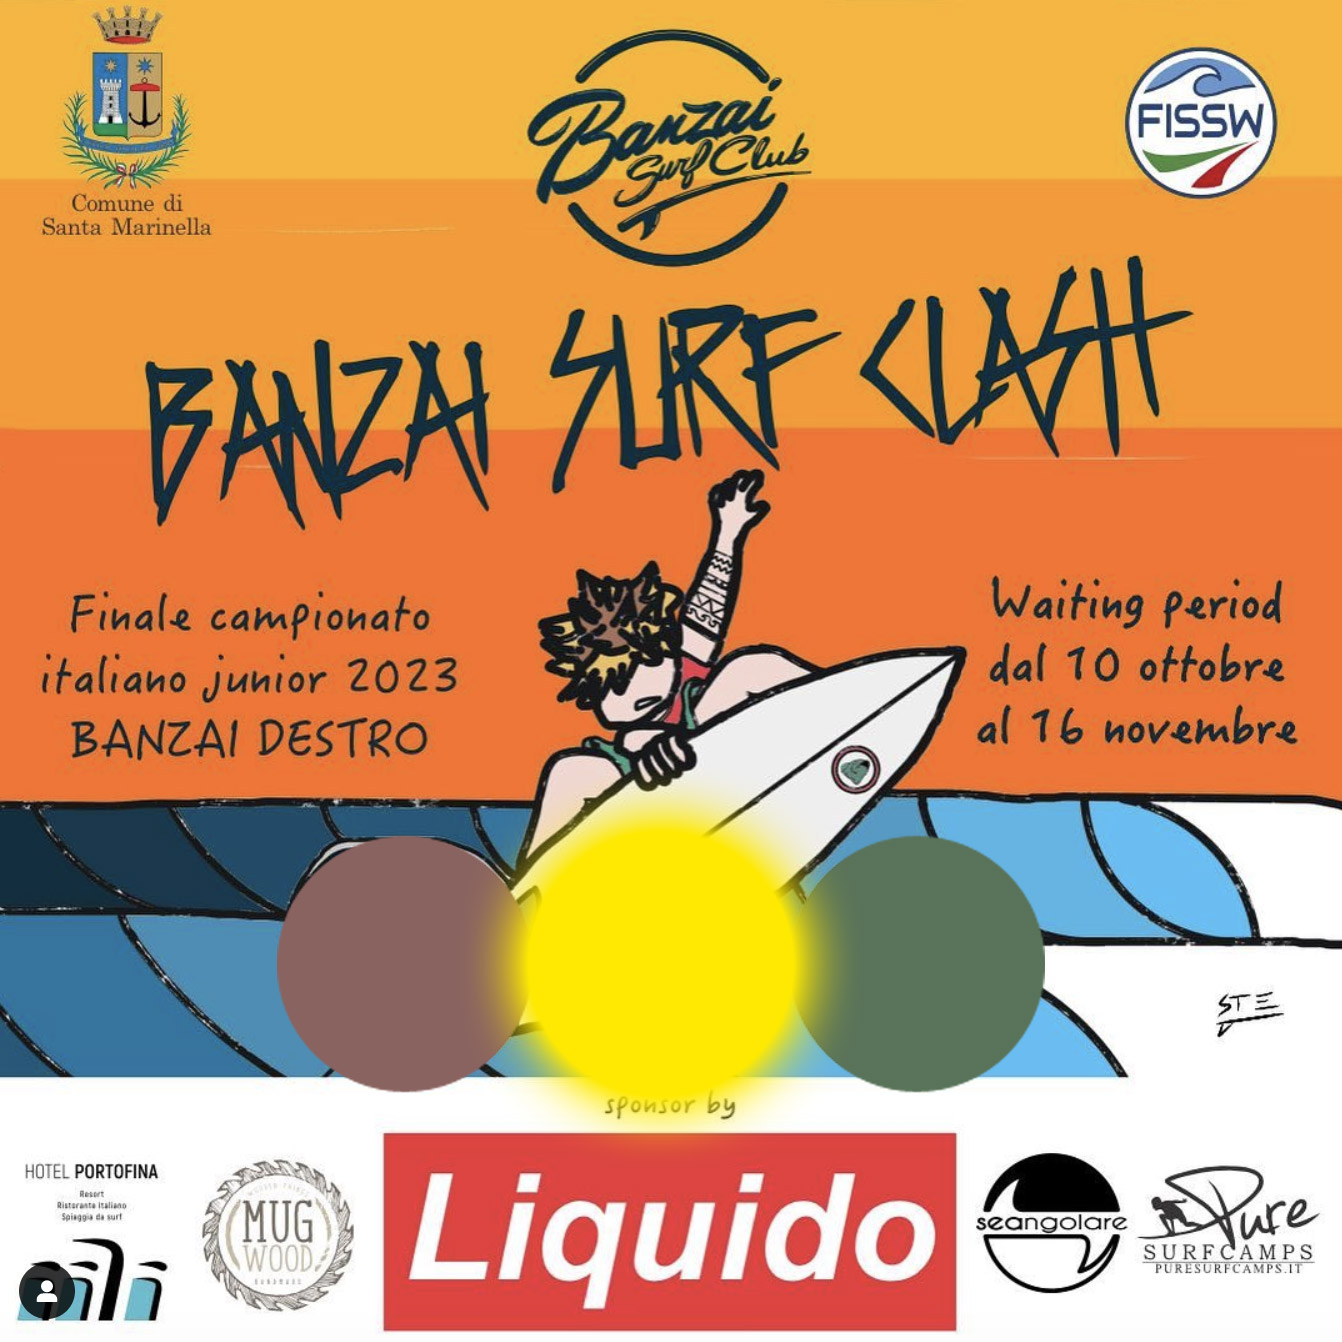 banzai-surf-clash-2023-locandina-semaforo-giallo